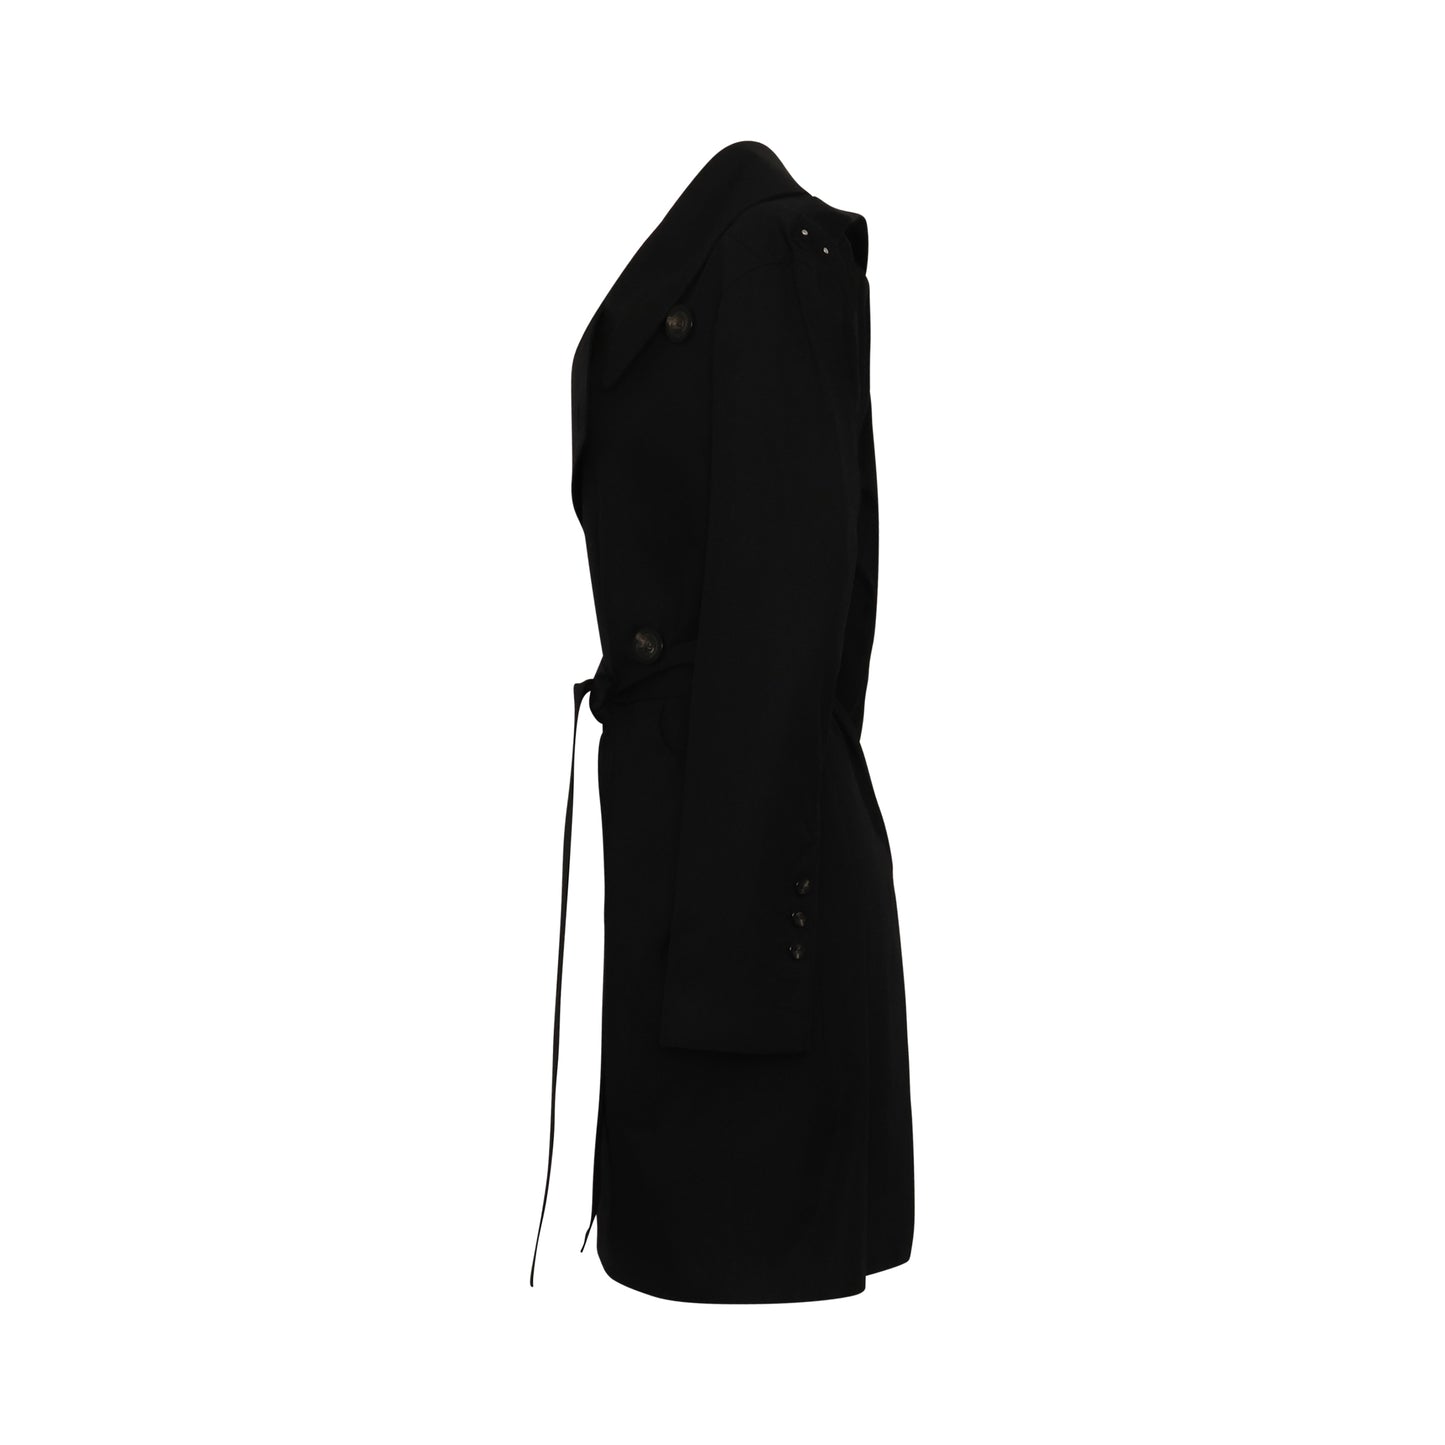 Performa Trench Coat in Black